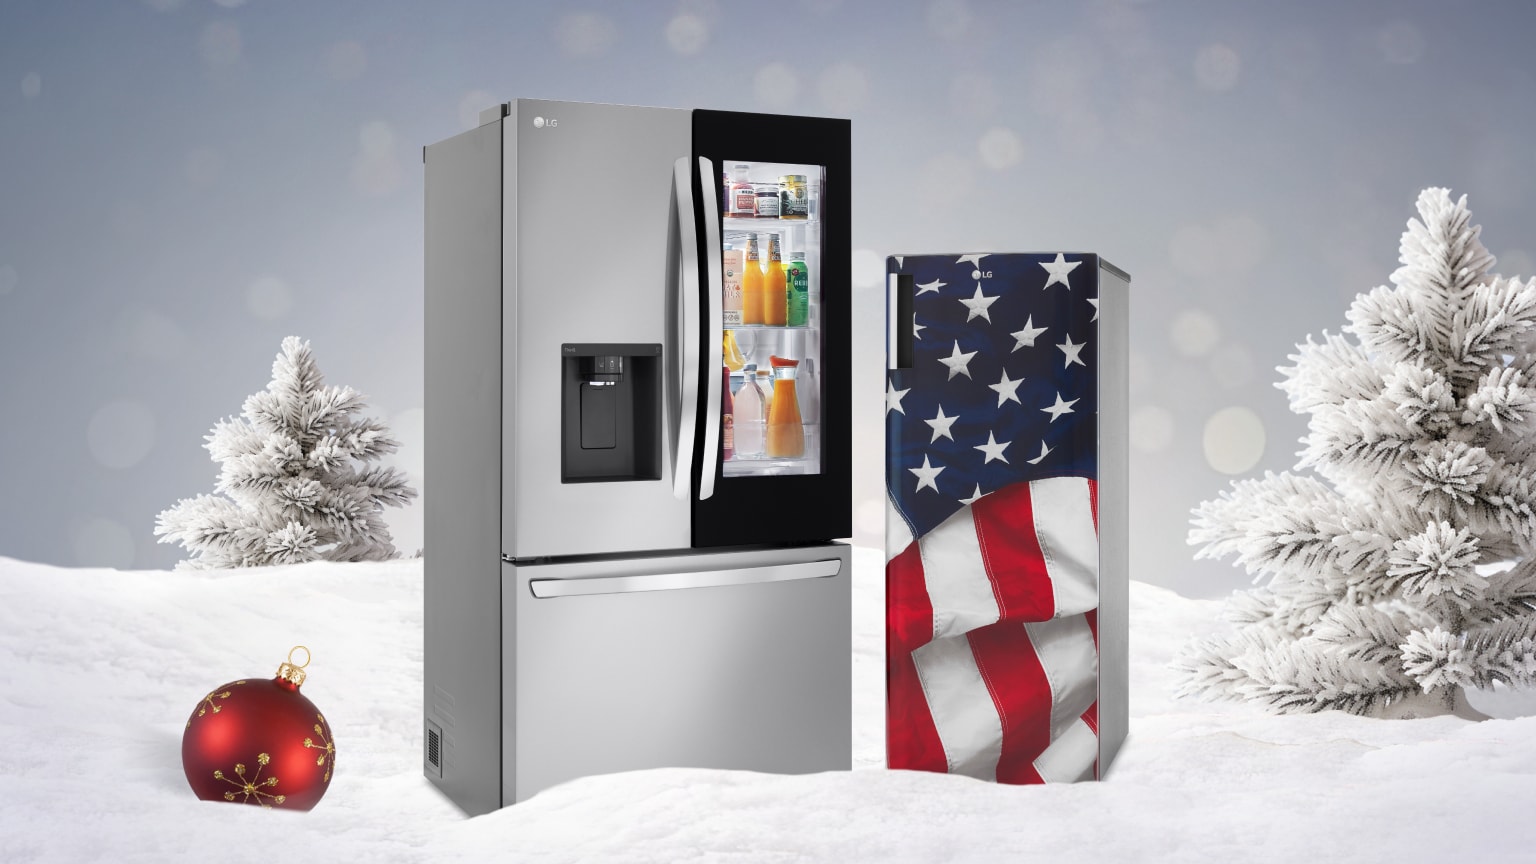 Buy a fridge. Get a bonus fridge.